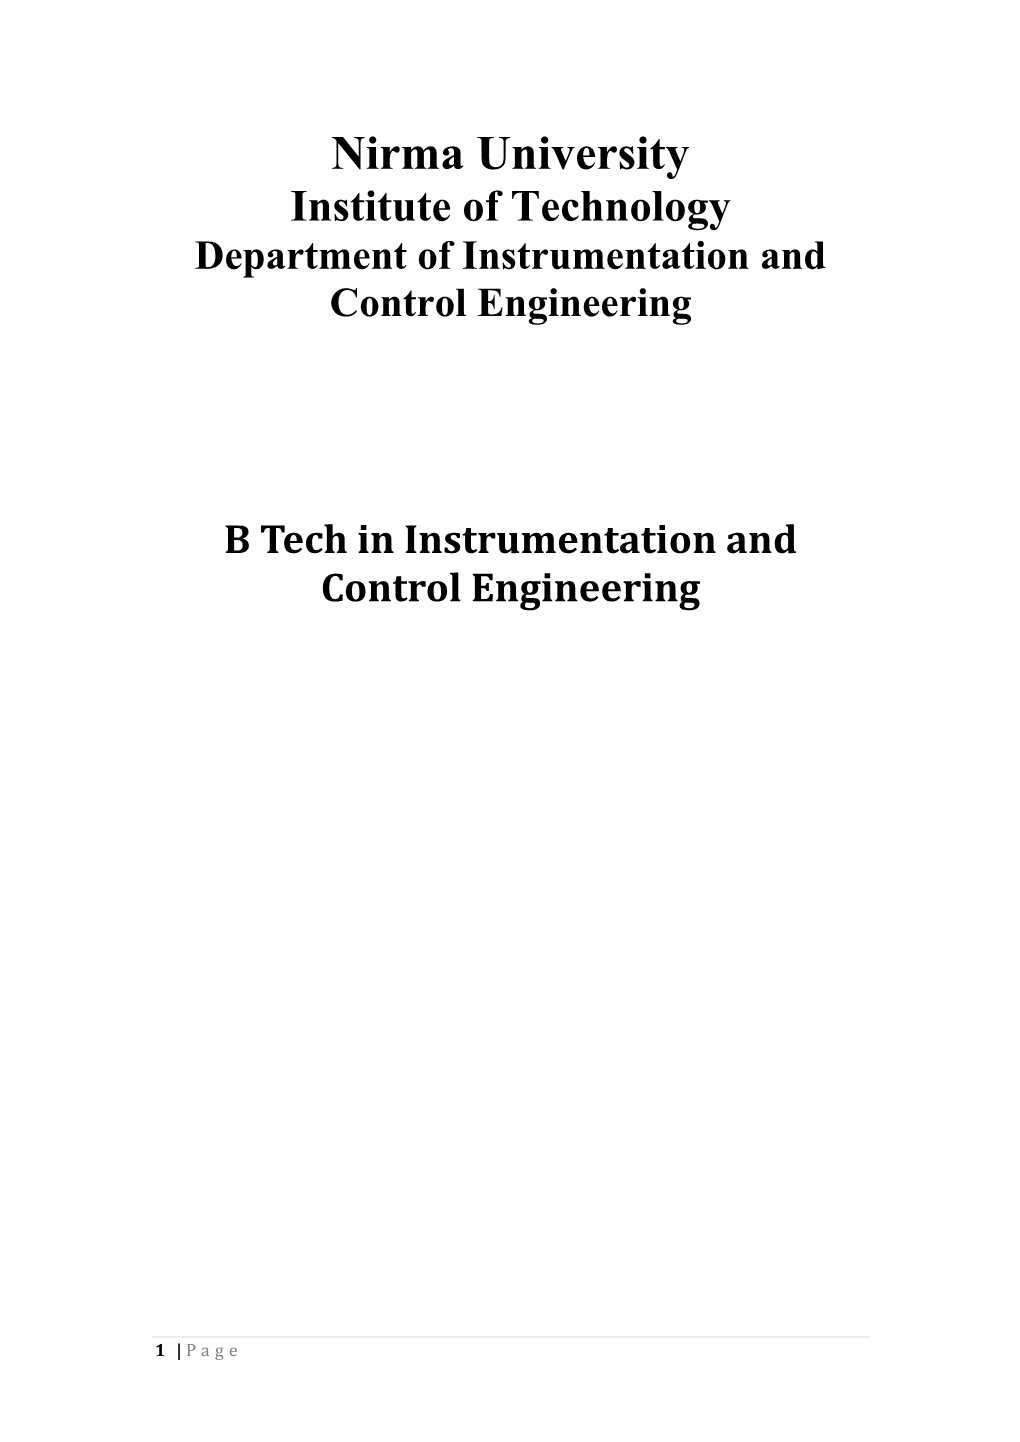 B. Tech in Instrumentation & Control Engineering